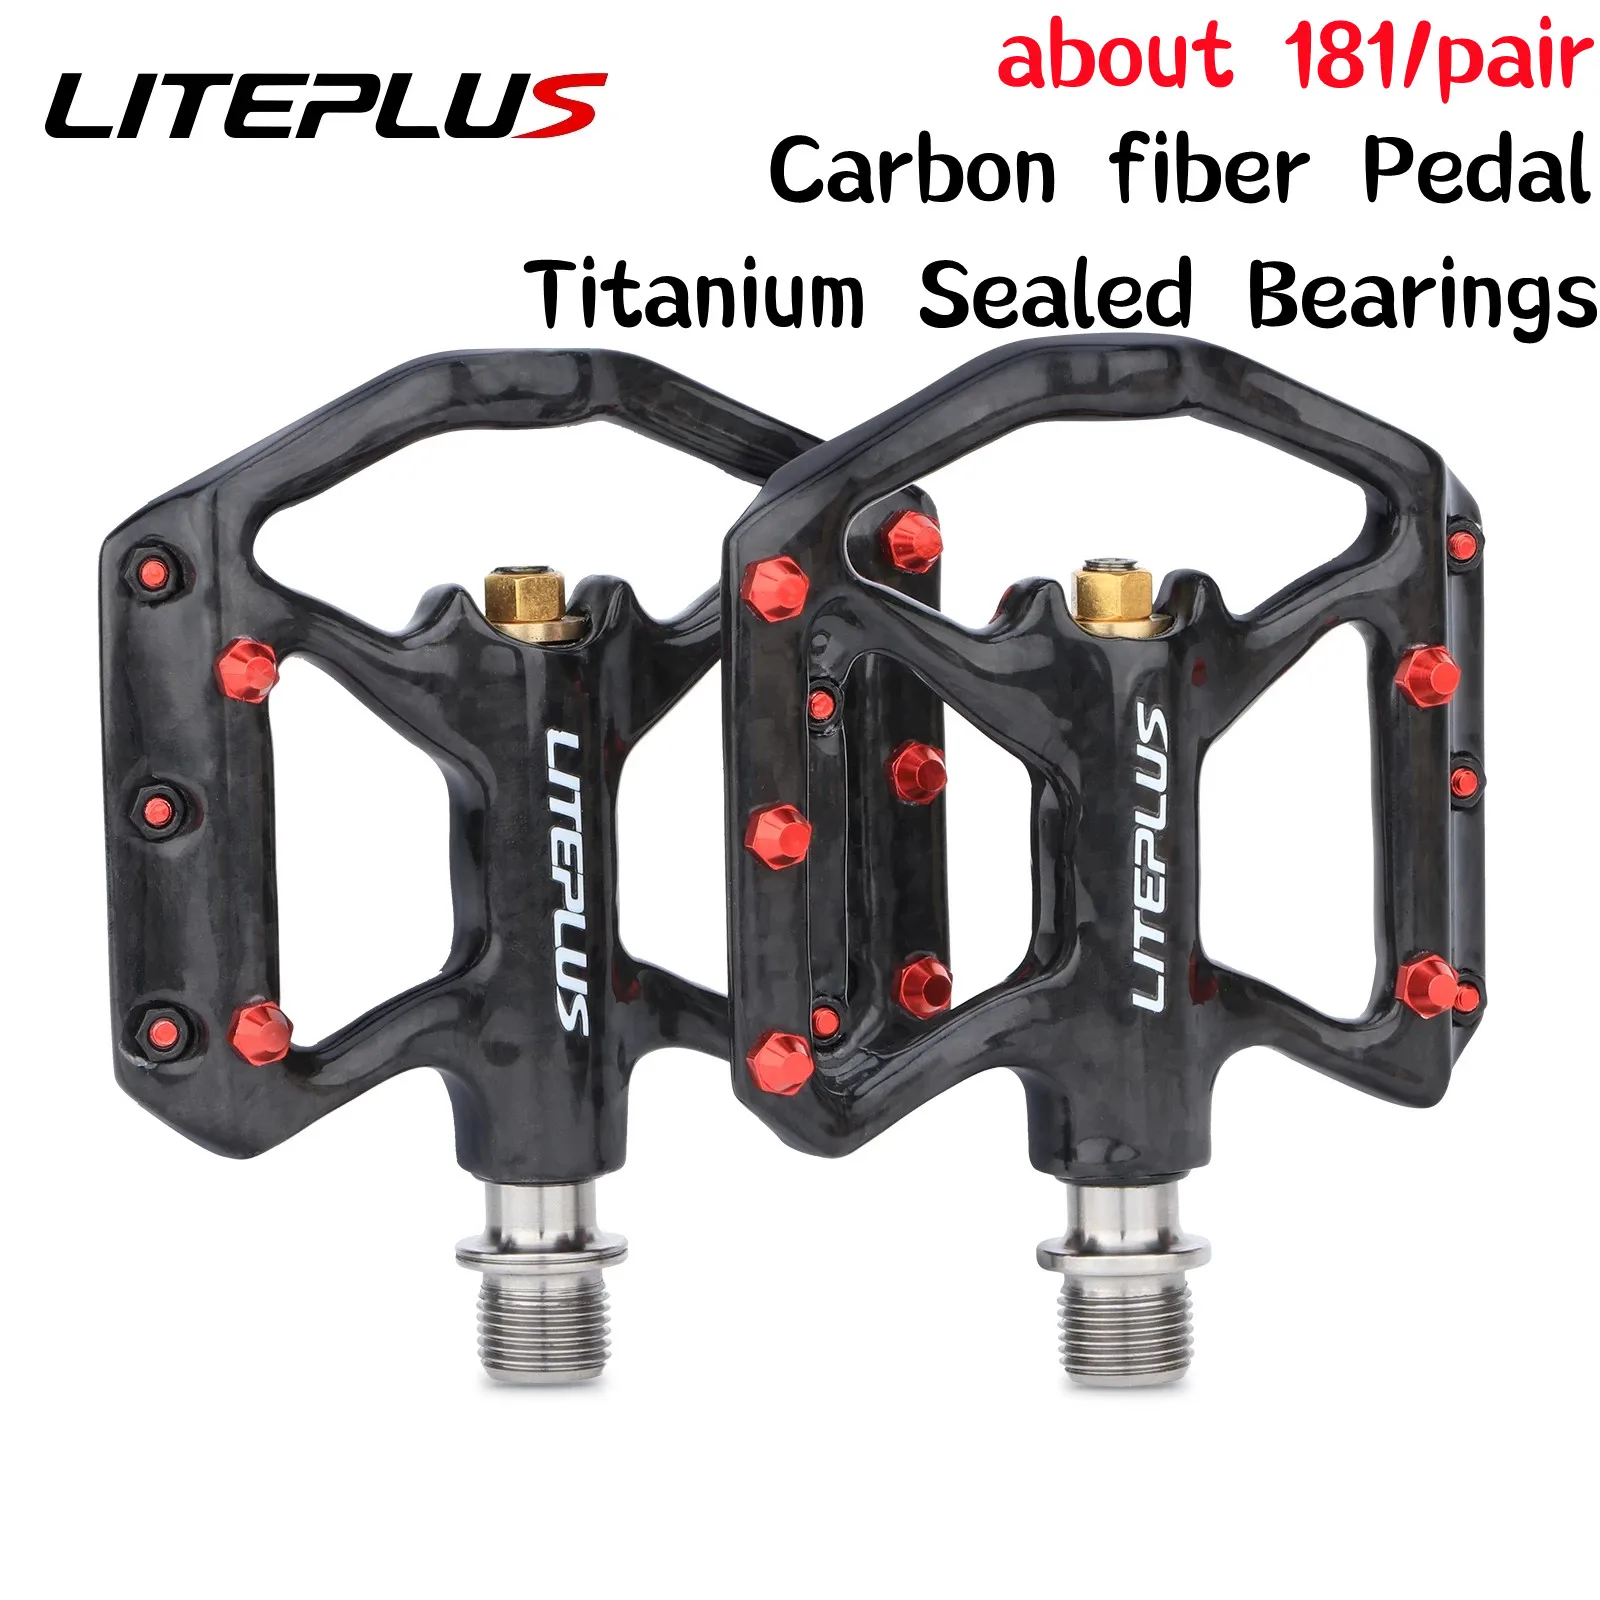 LITEPRO Road Bicycle Carbon Fiber Pedal 3 Bearing Ultralight 181g Titanium Axis MTB Mountain Bike Folding Bike BMX For Rockbros